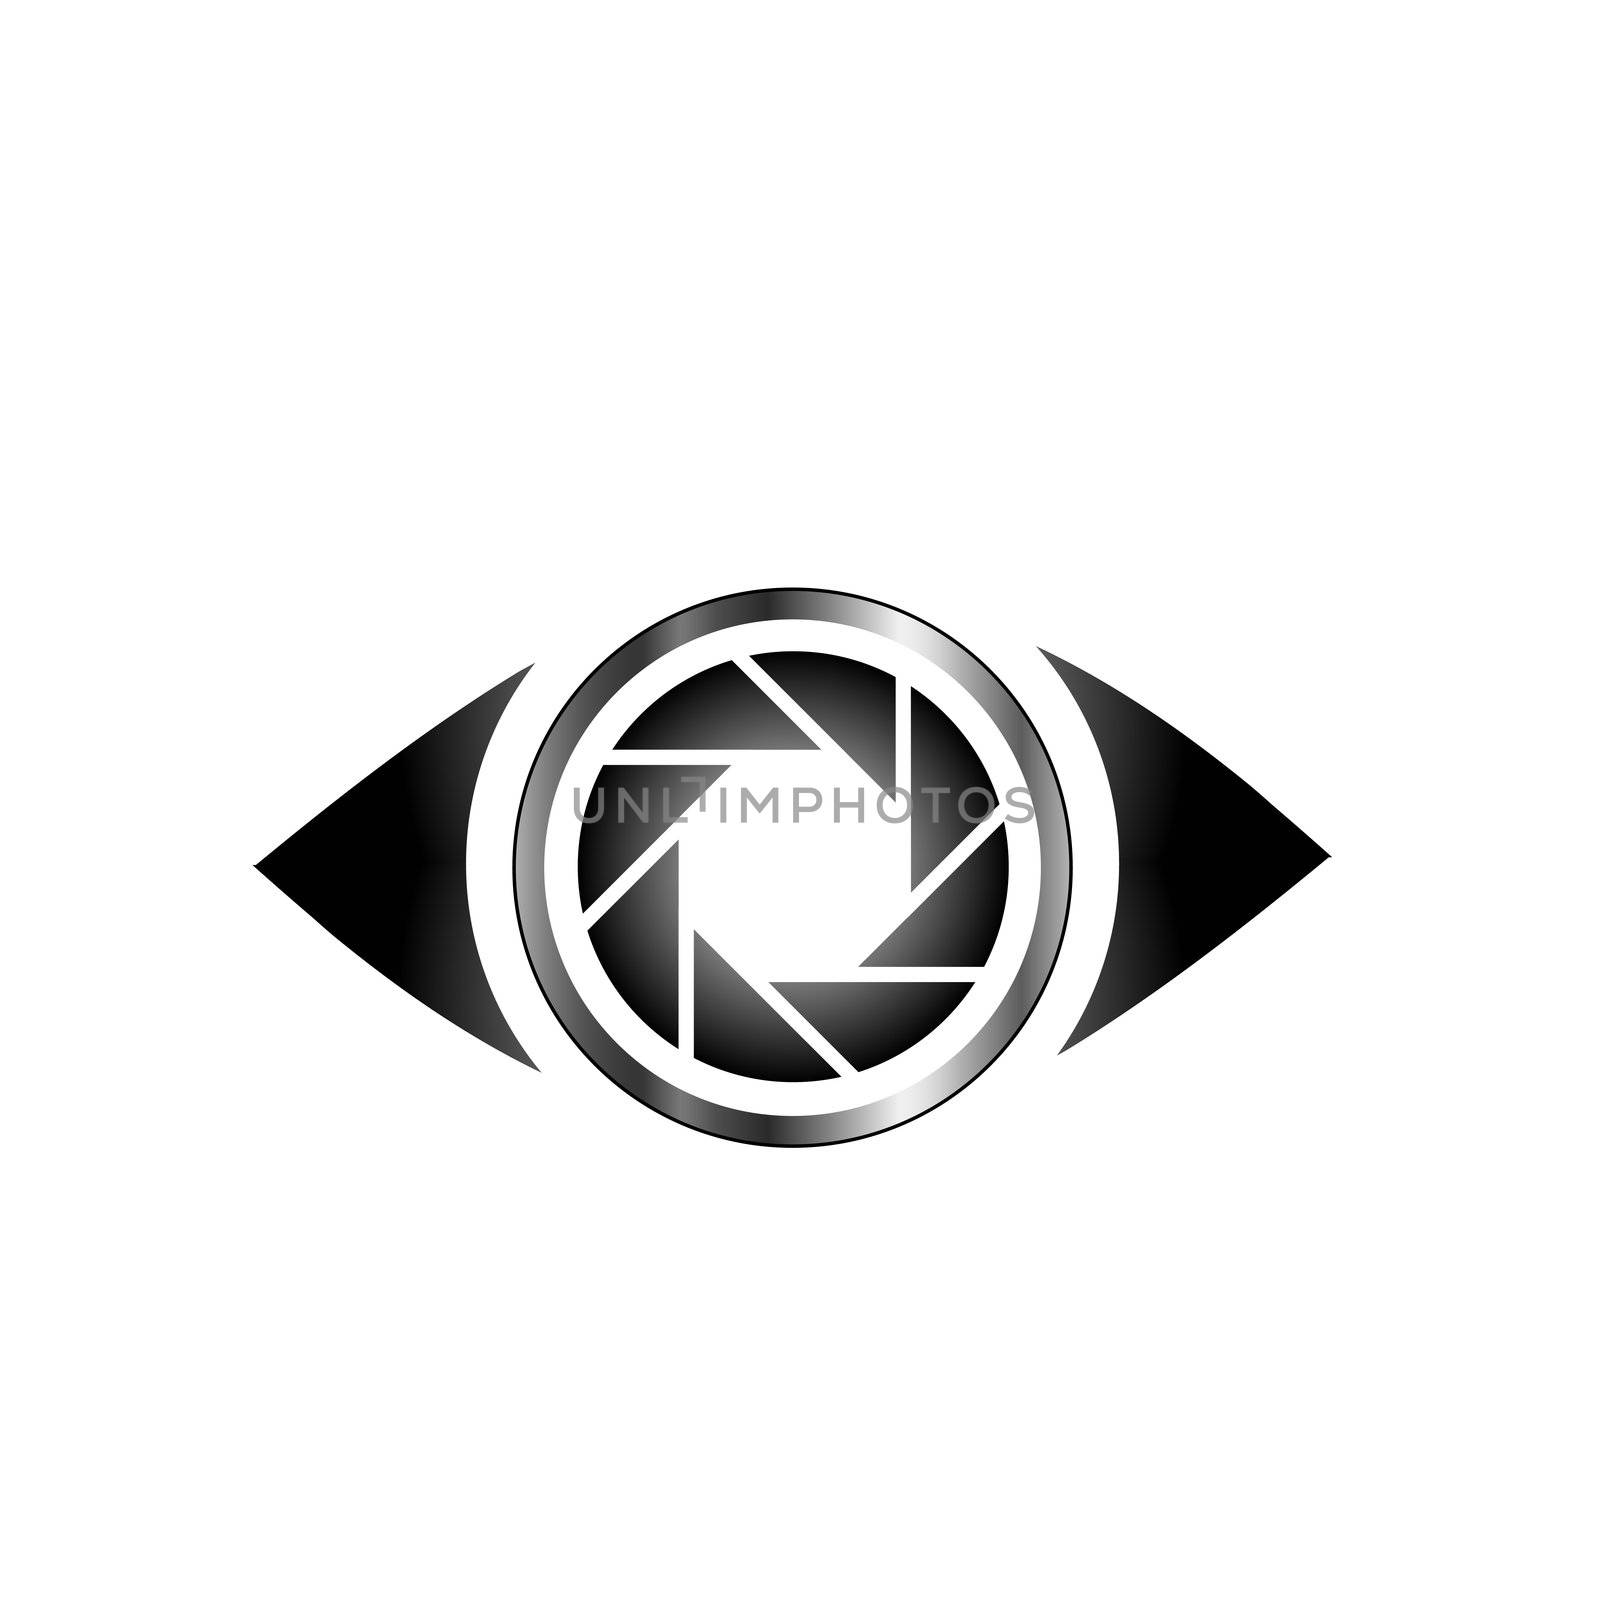 Eyeball snapshot logo